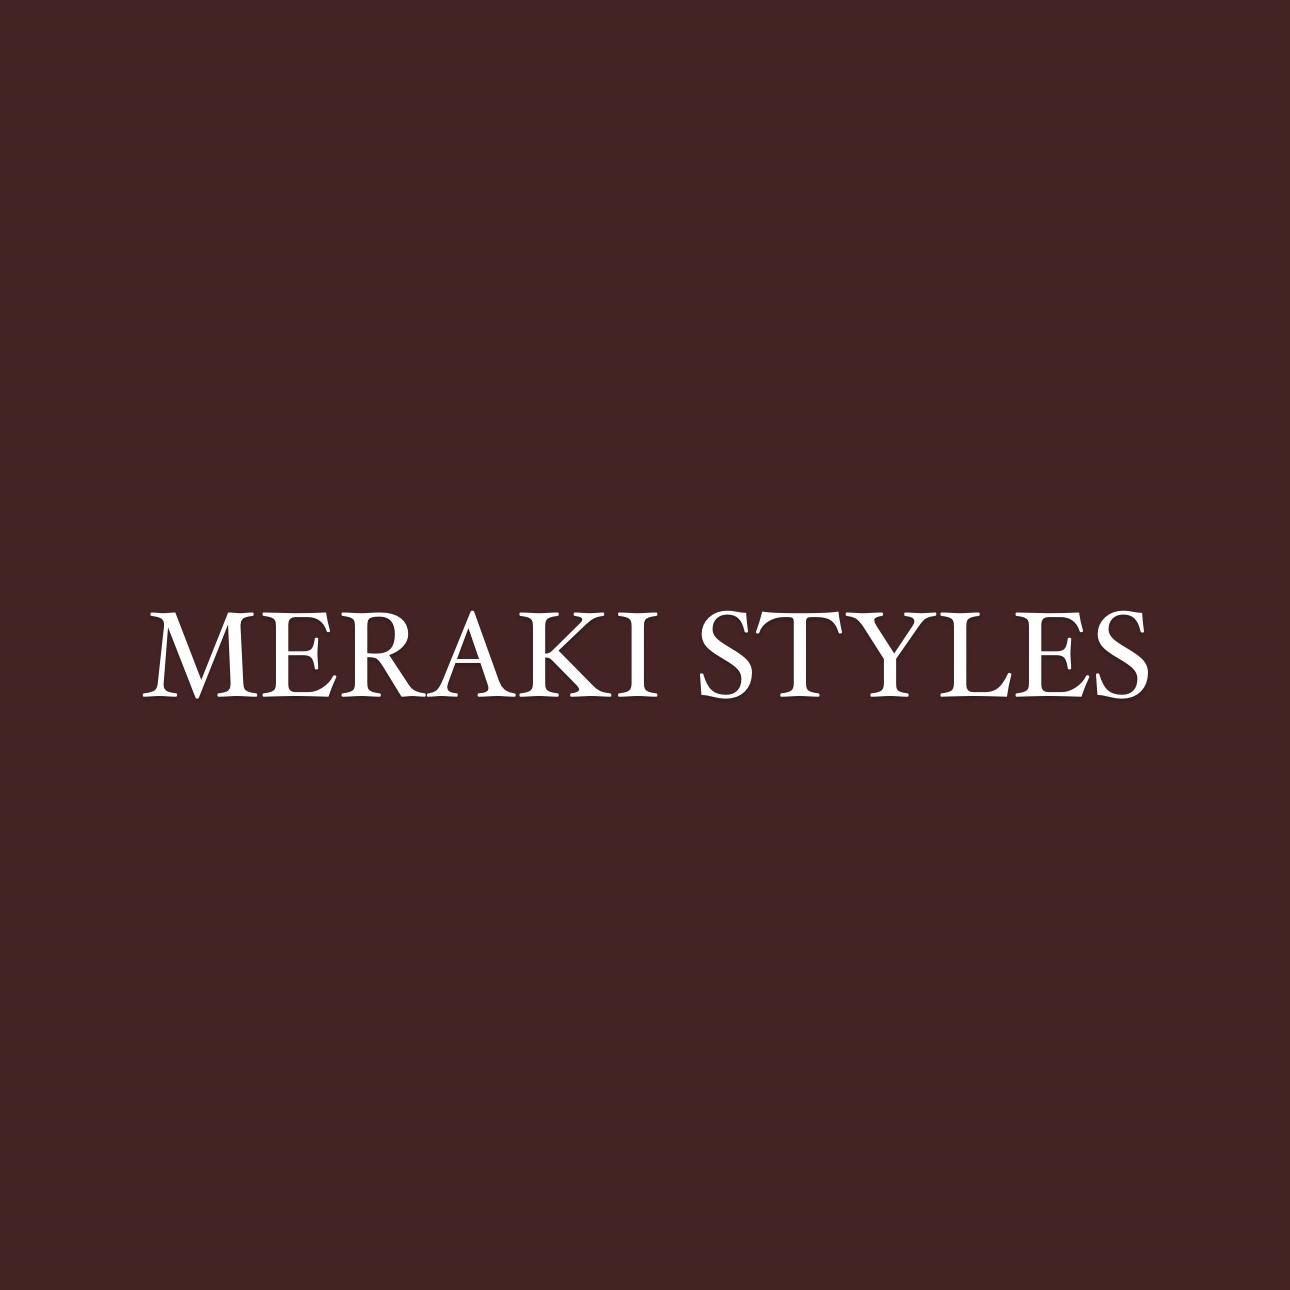 Merakistyles 's images